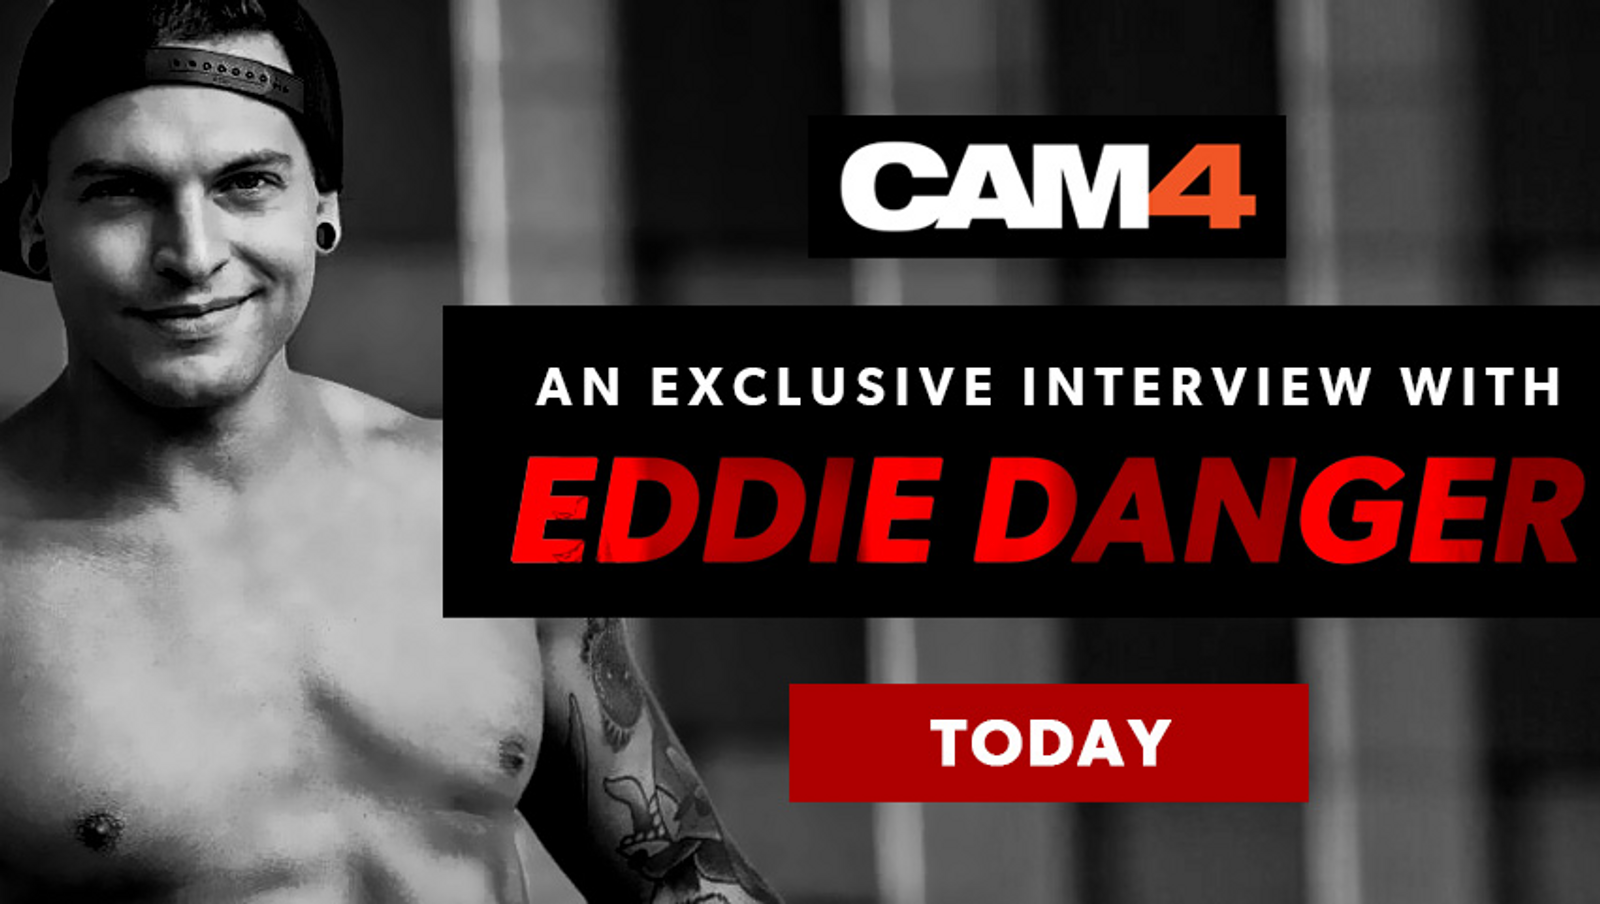 CAM4 Spotlights Eddie Danger in New Interview